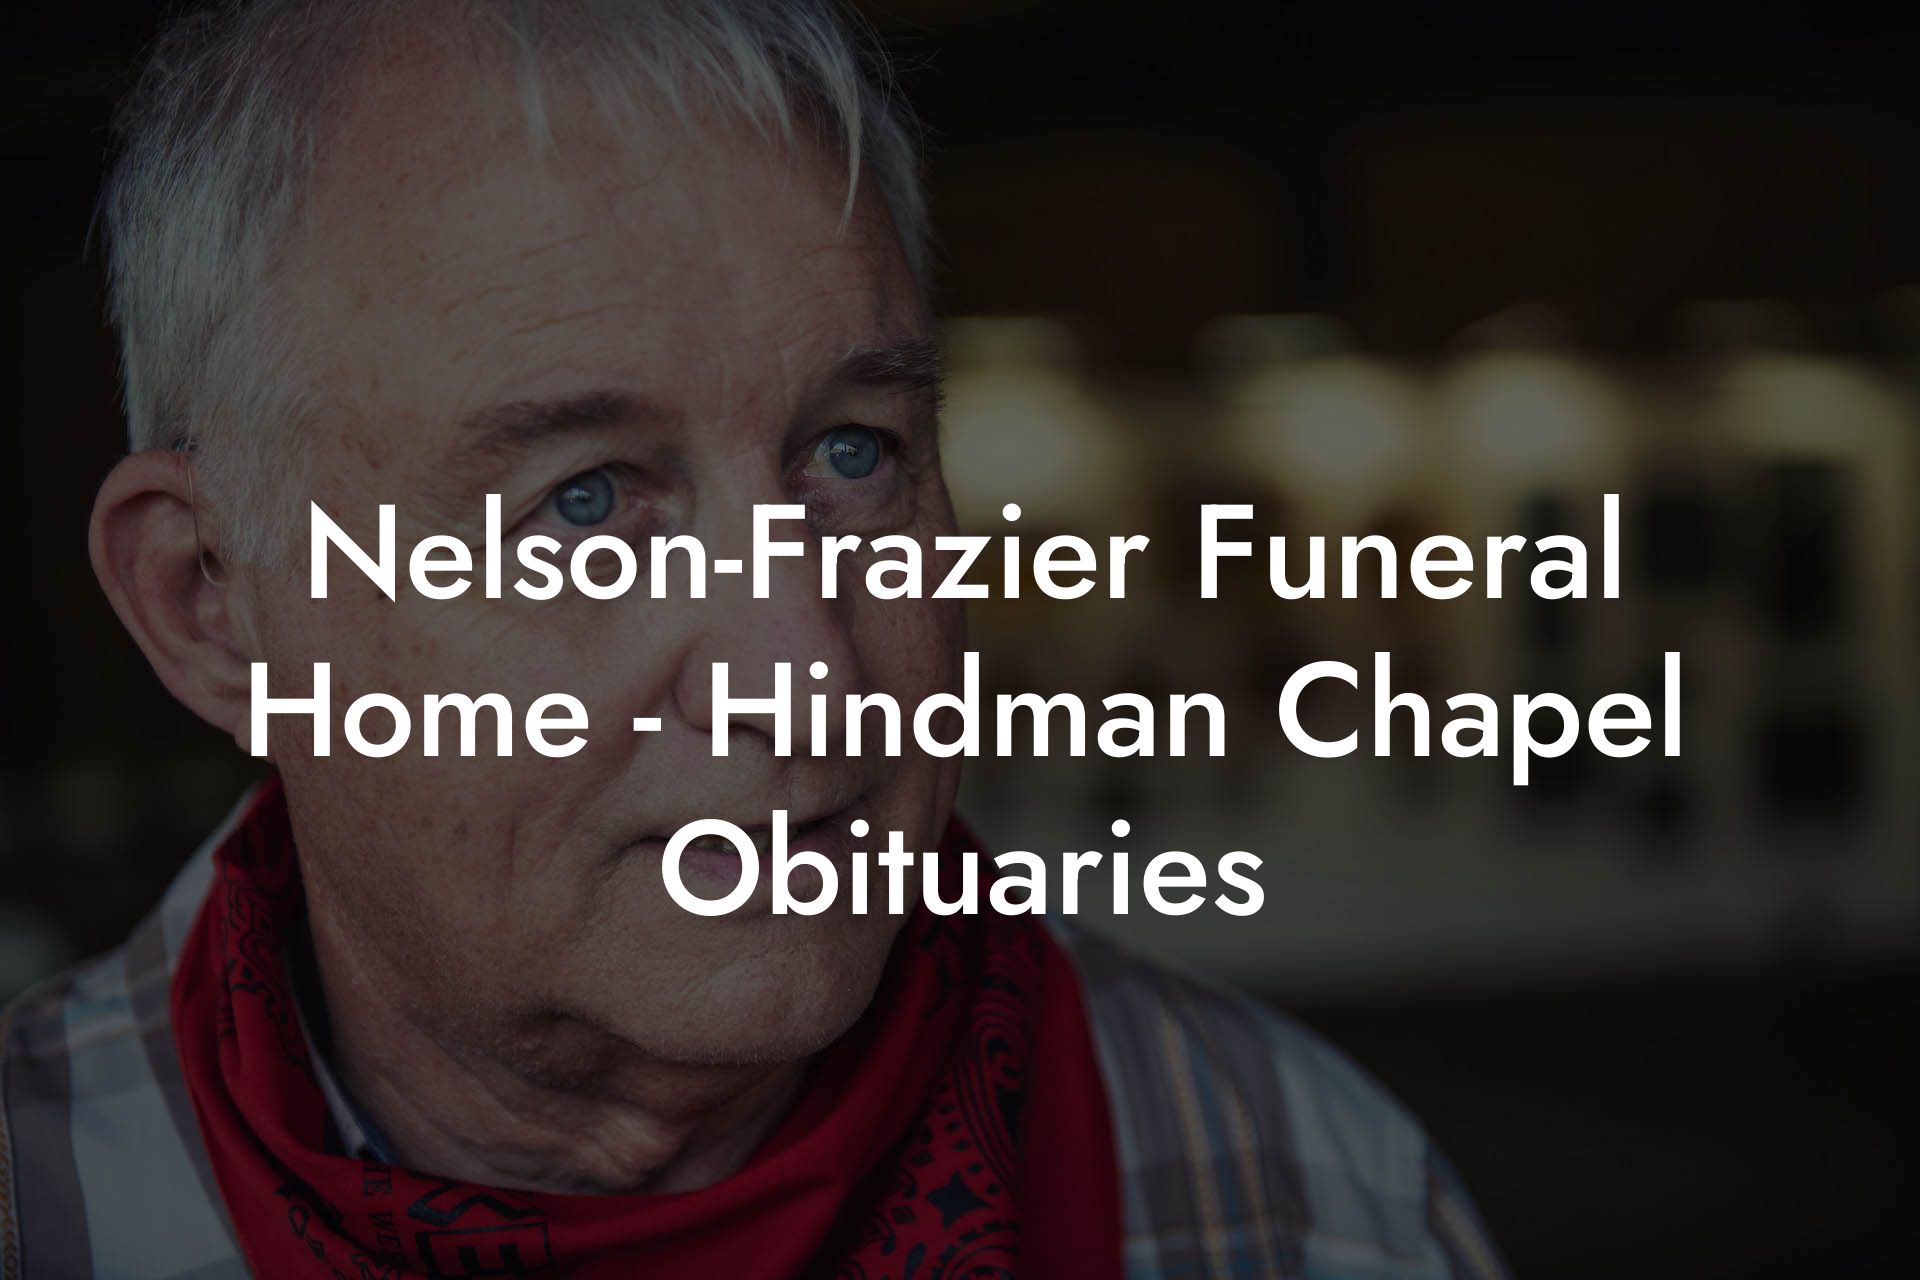 Nelson-Frazier Funeral Home - Hindman Chapel Obituaries